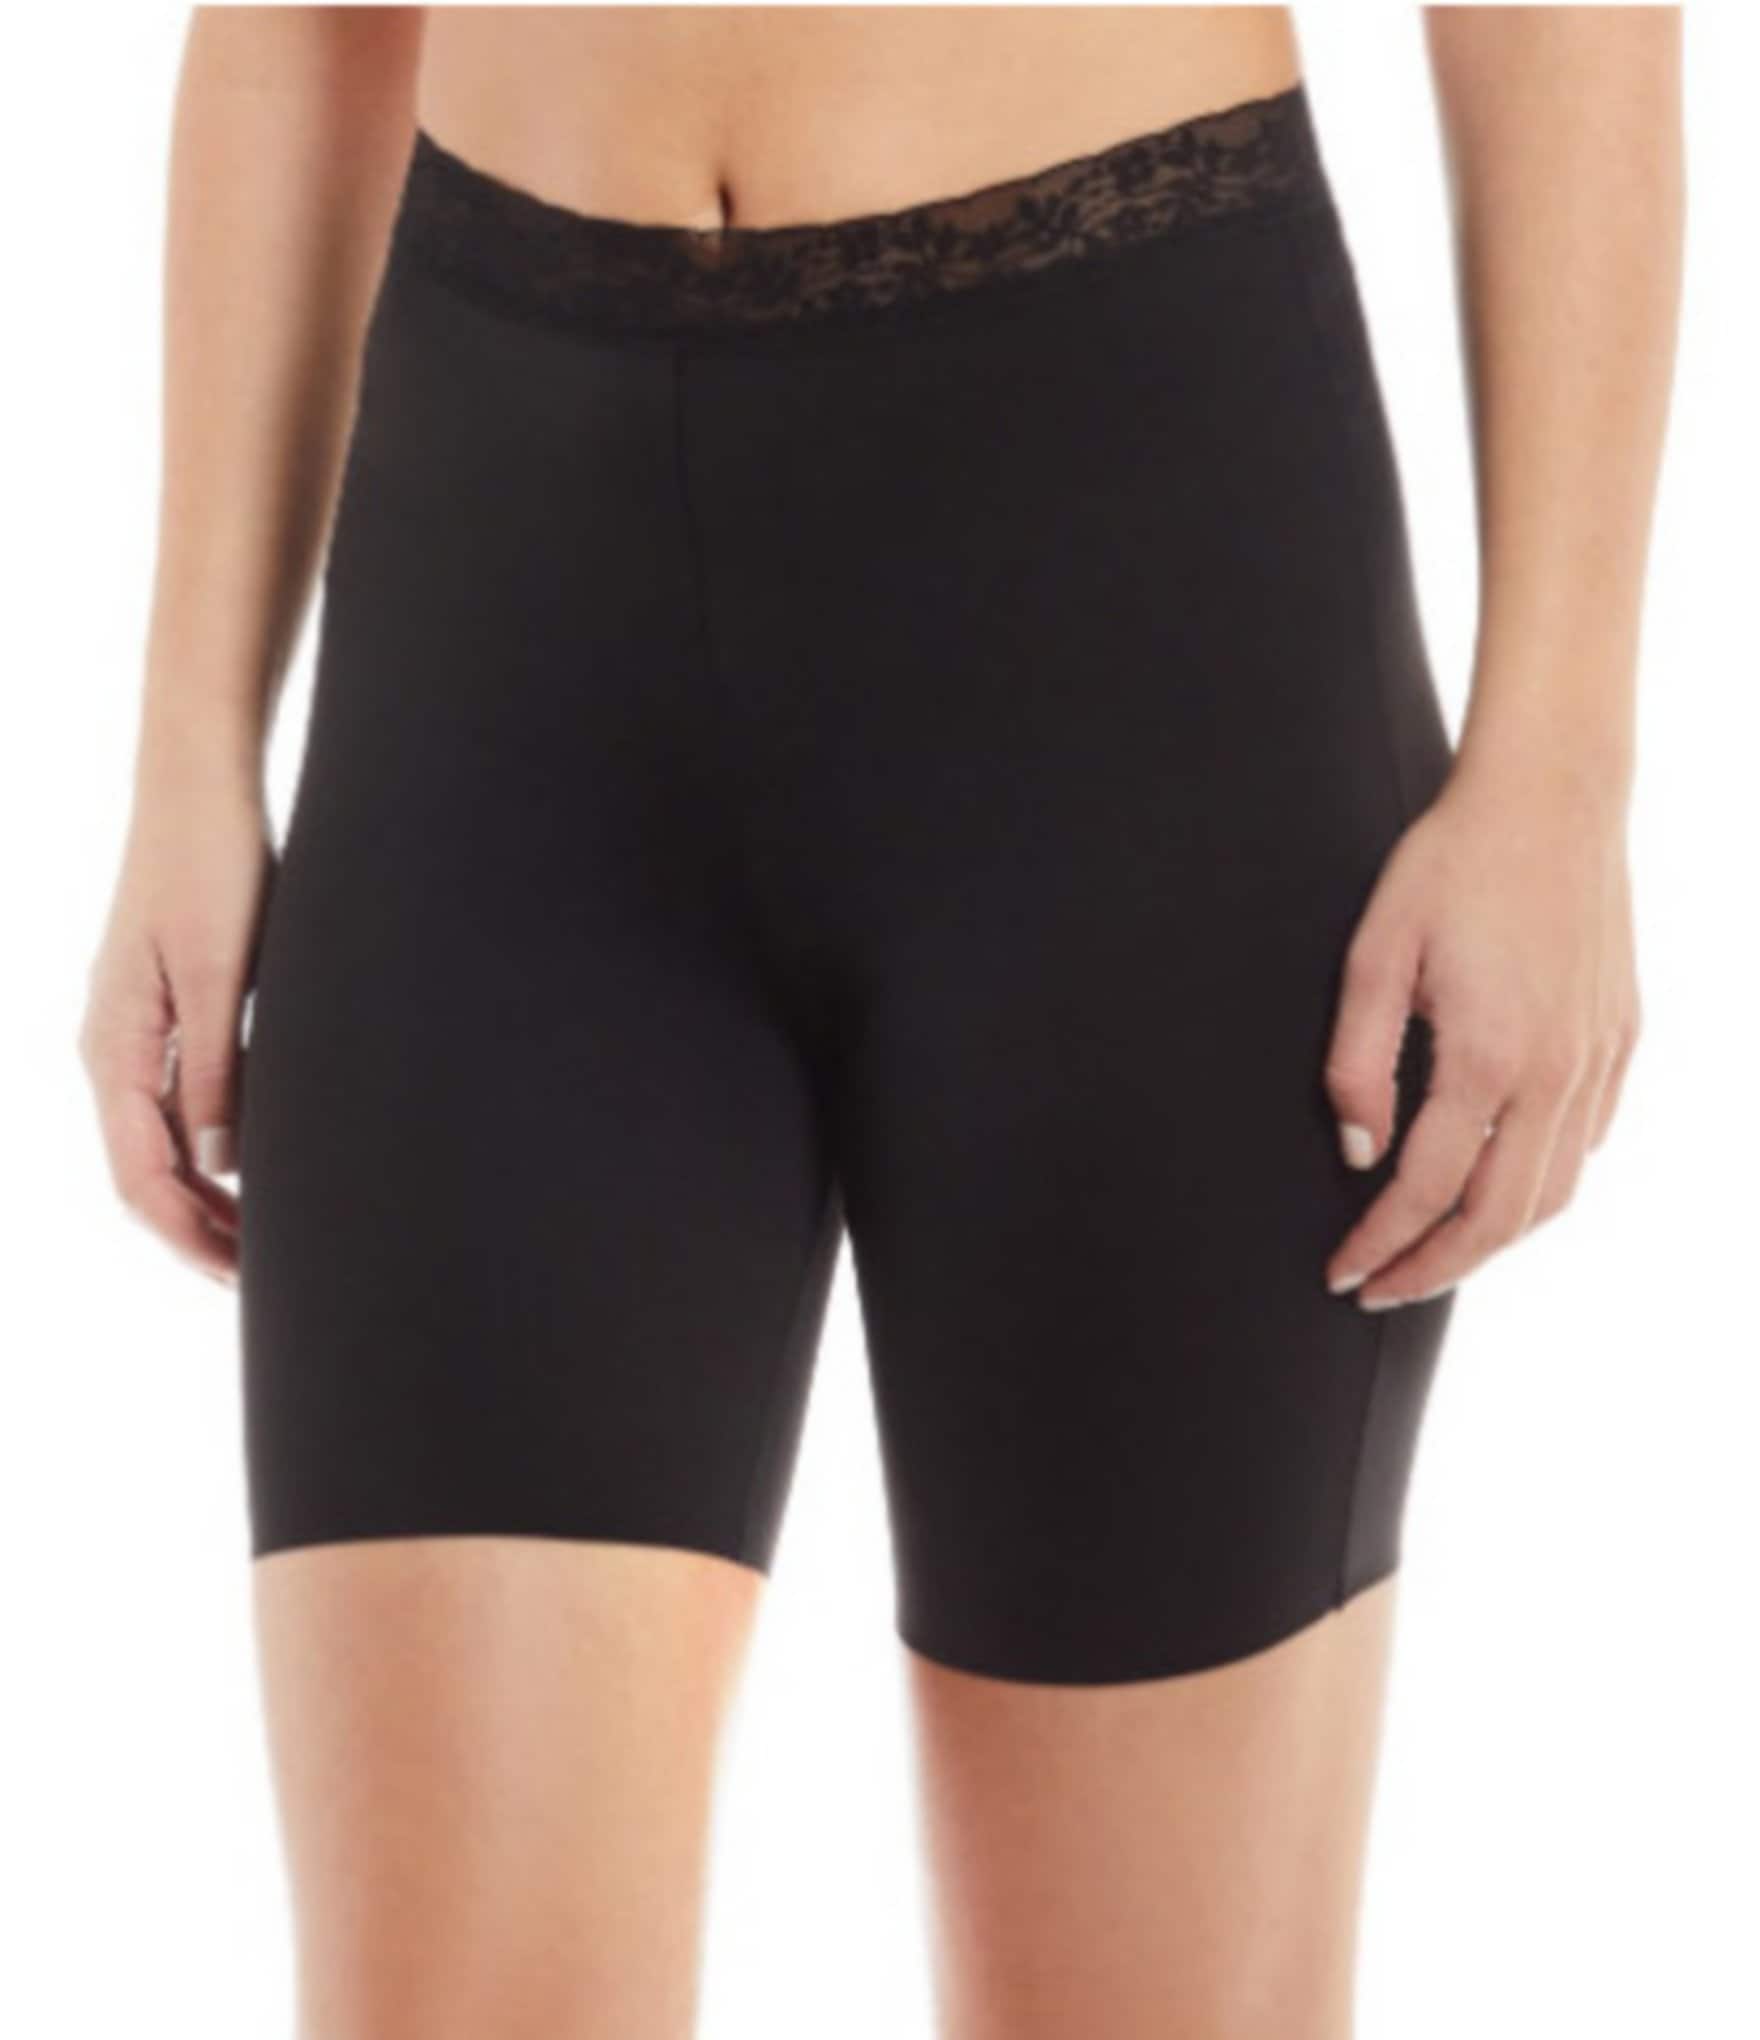 Slip Shorts for Women Breathable Elastic Waist Shorts Lace Safety